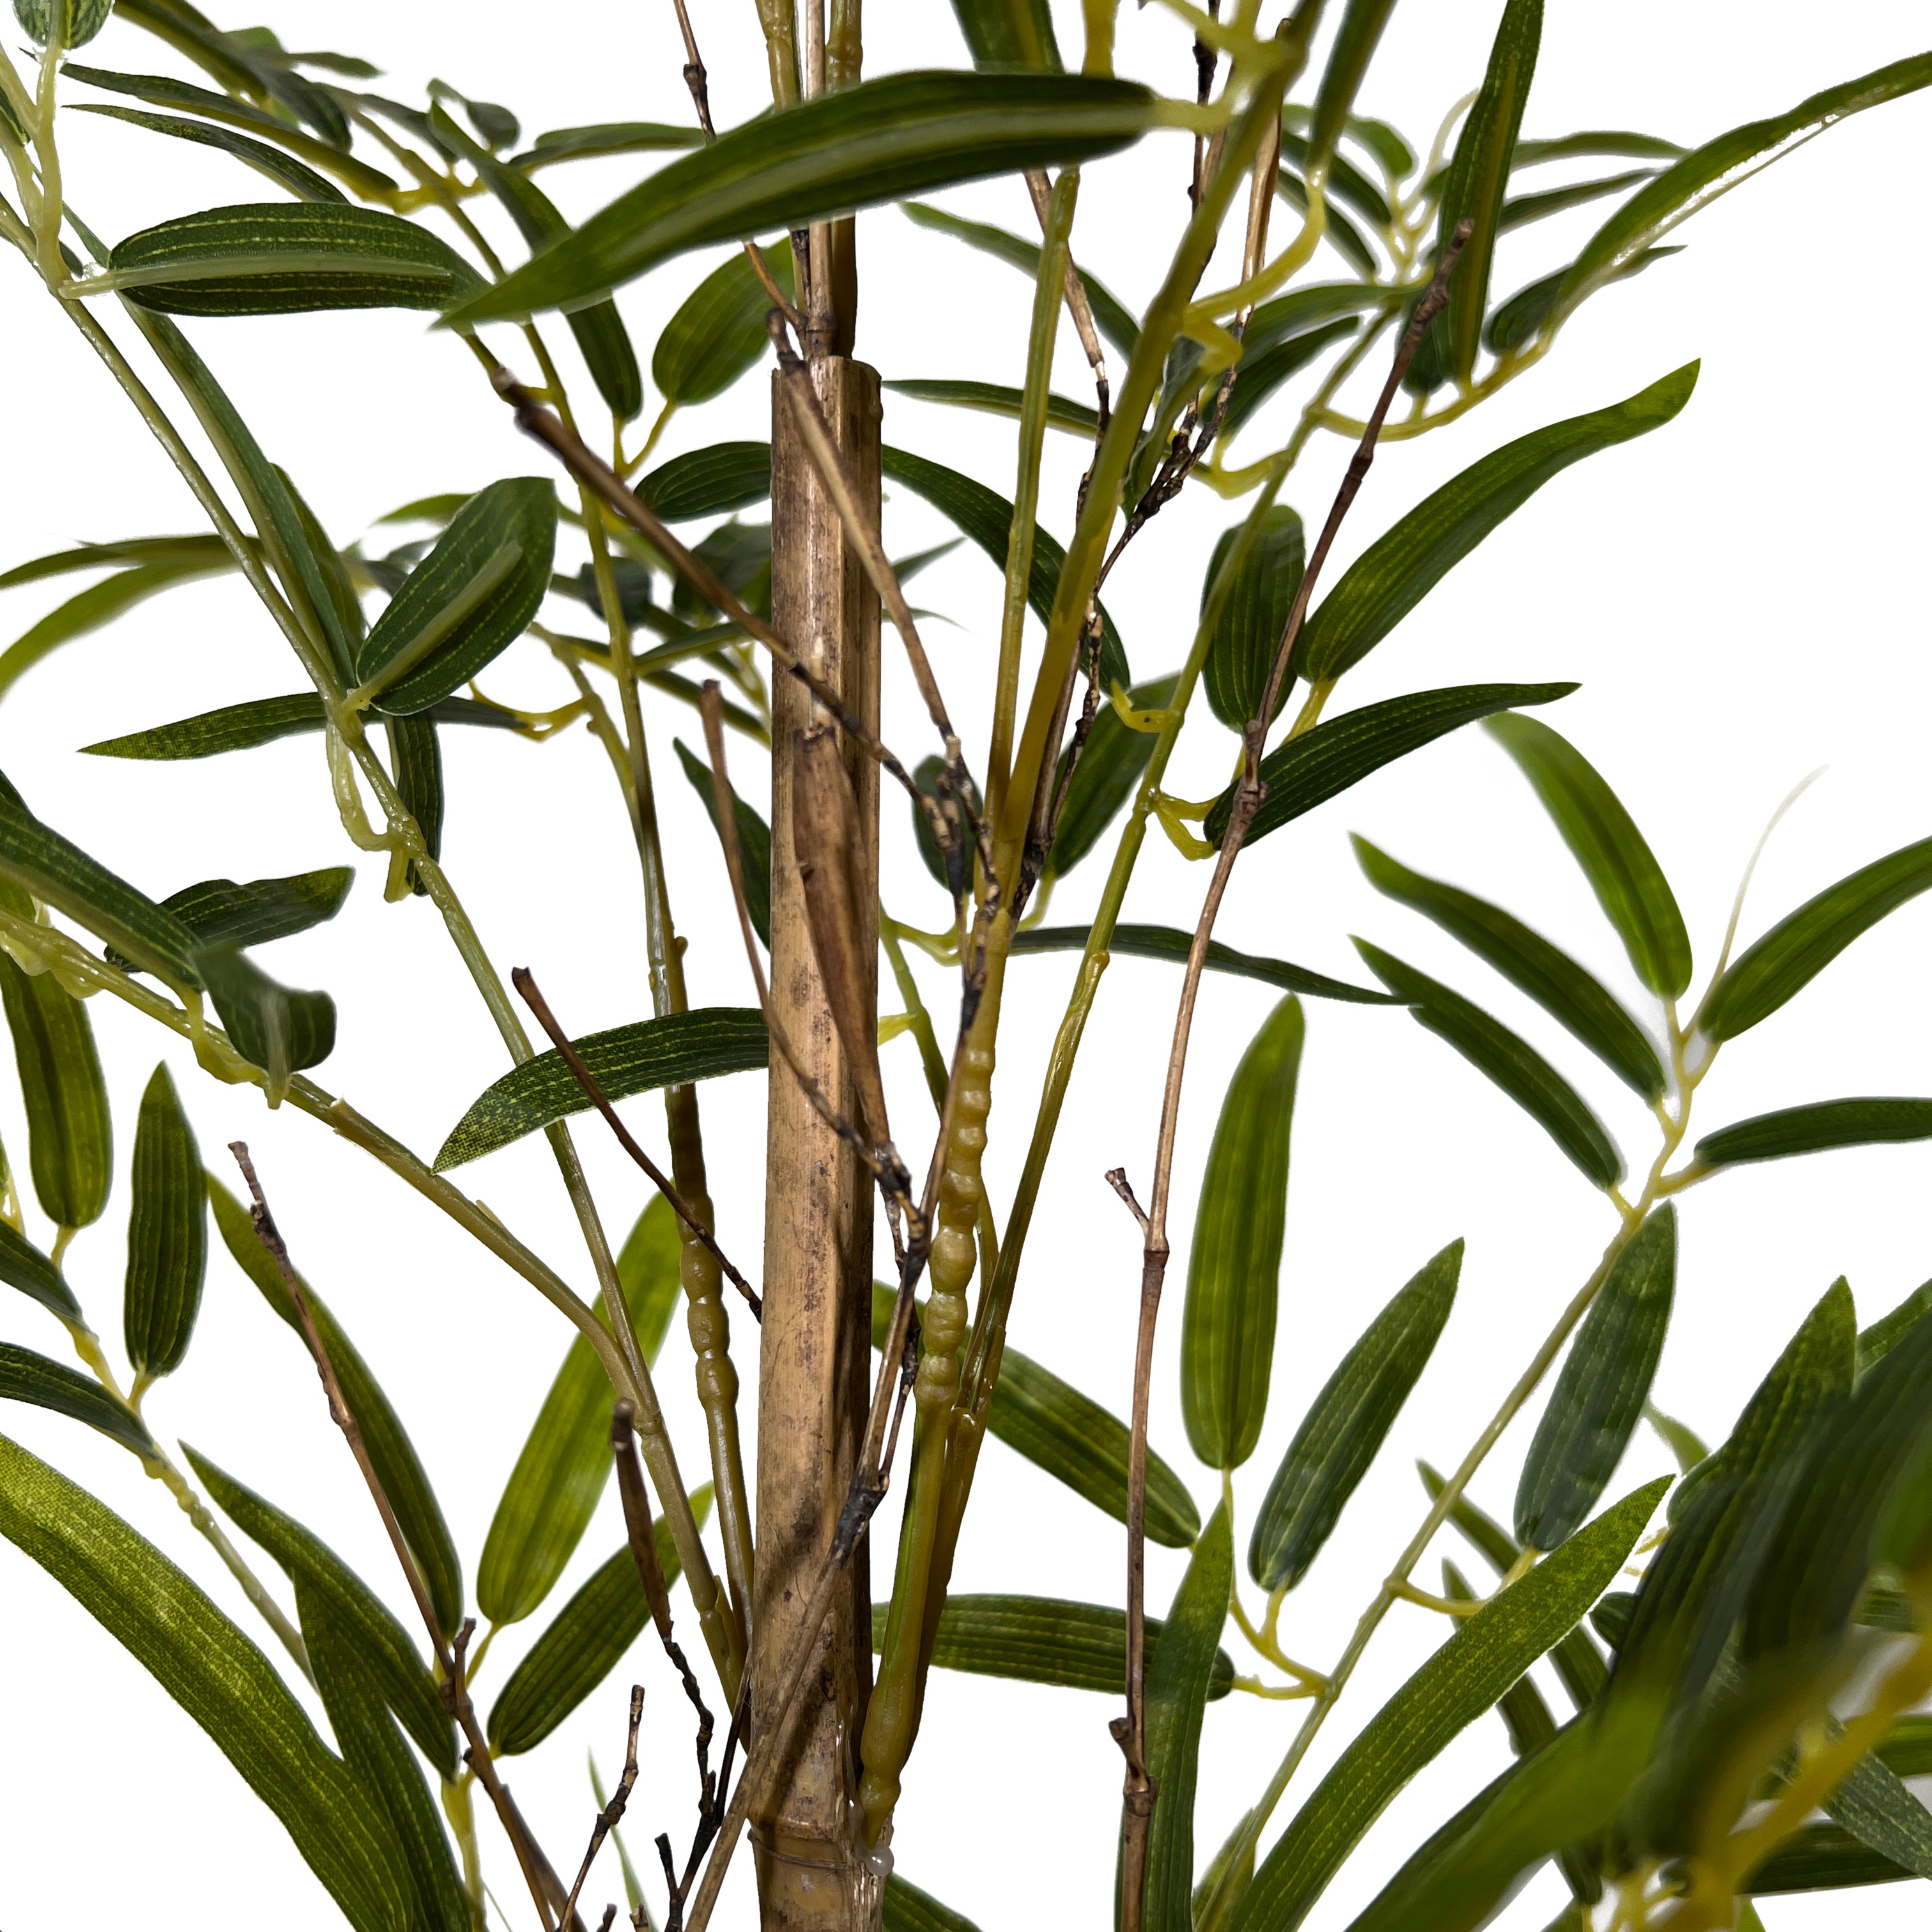 Kopu® Kunstpflanze Bambus 90 cm – im schwarzen Topf – Kunstpflanze – kopu